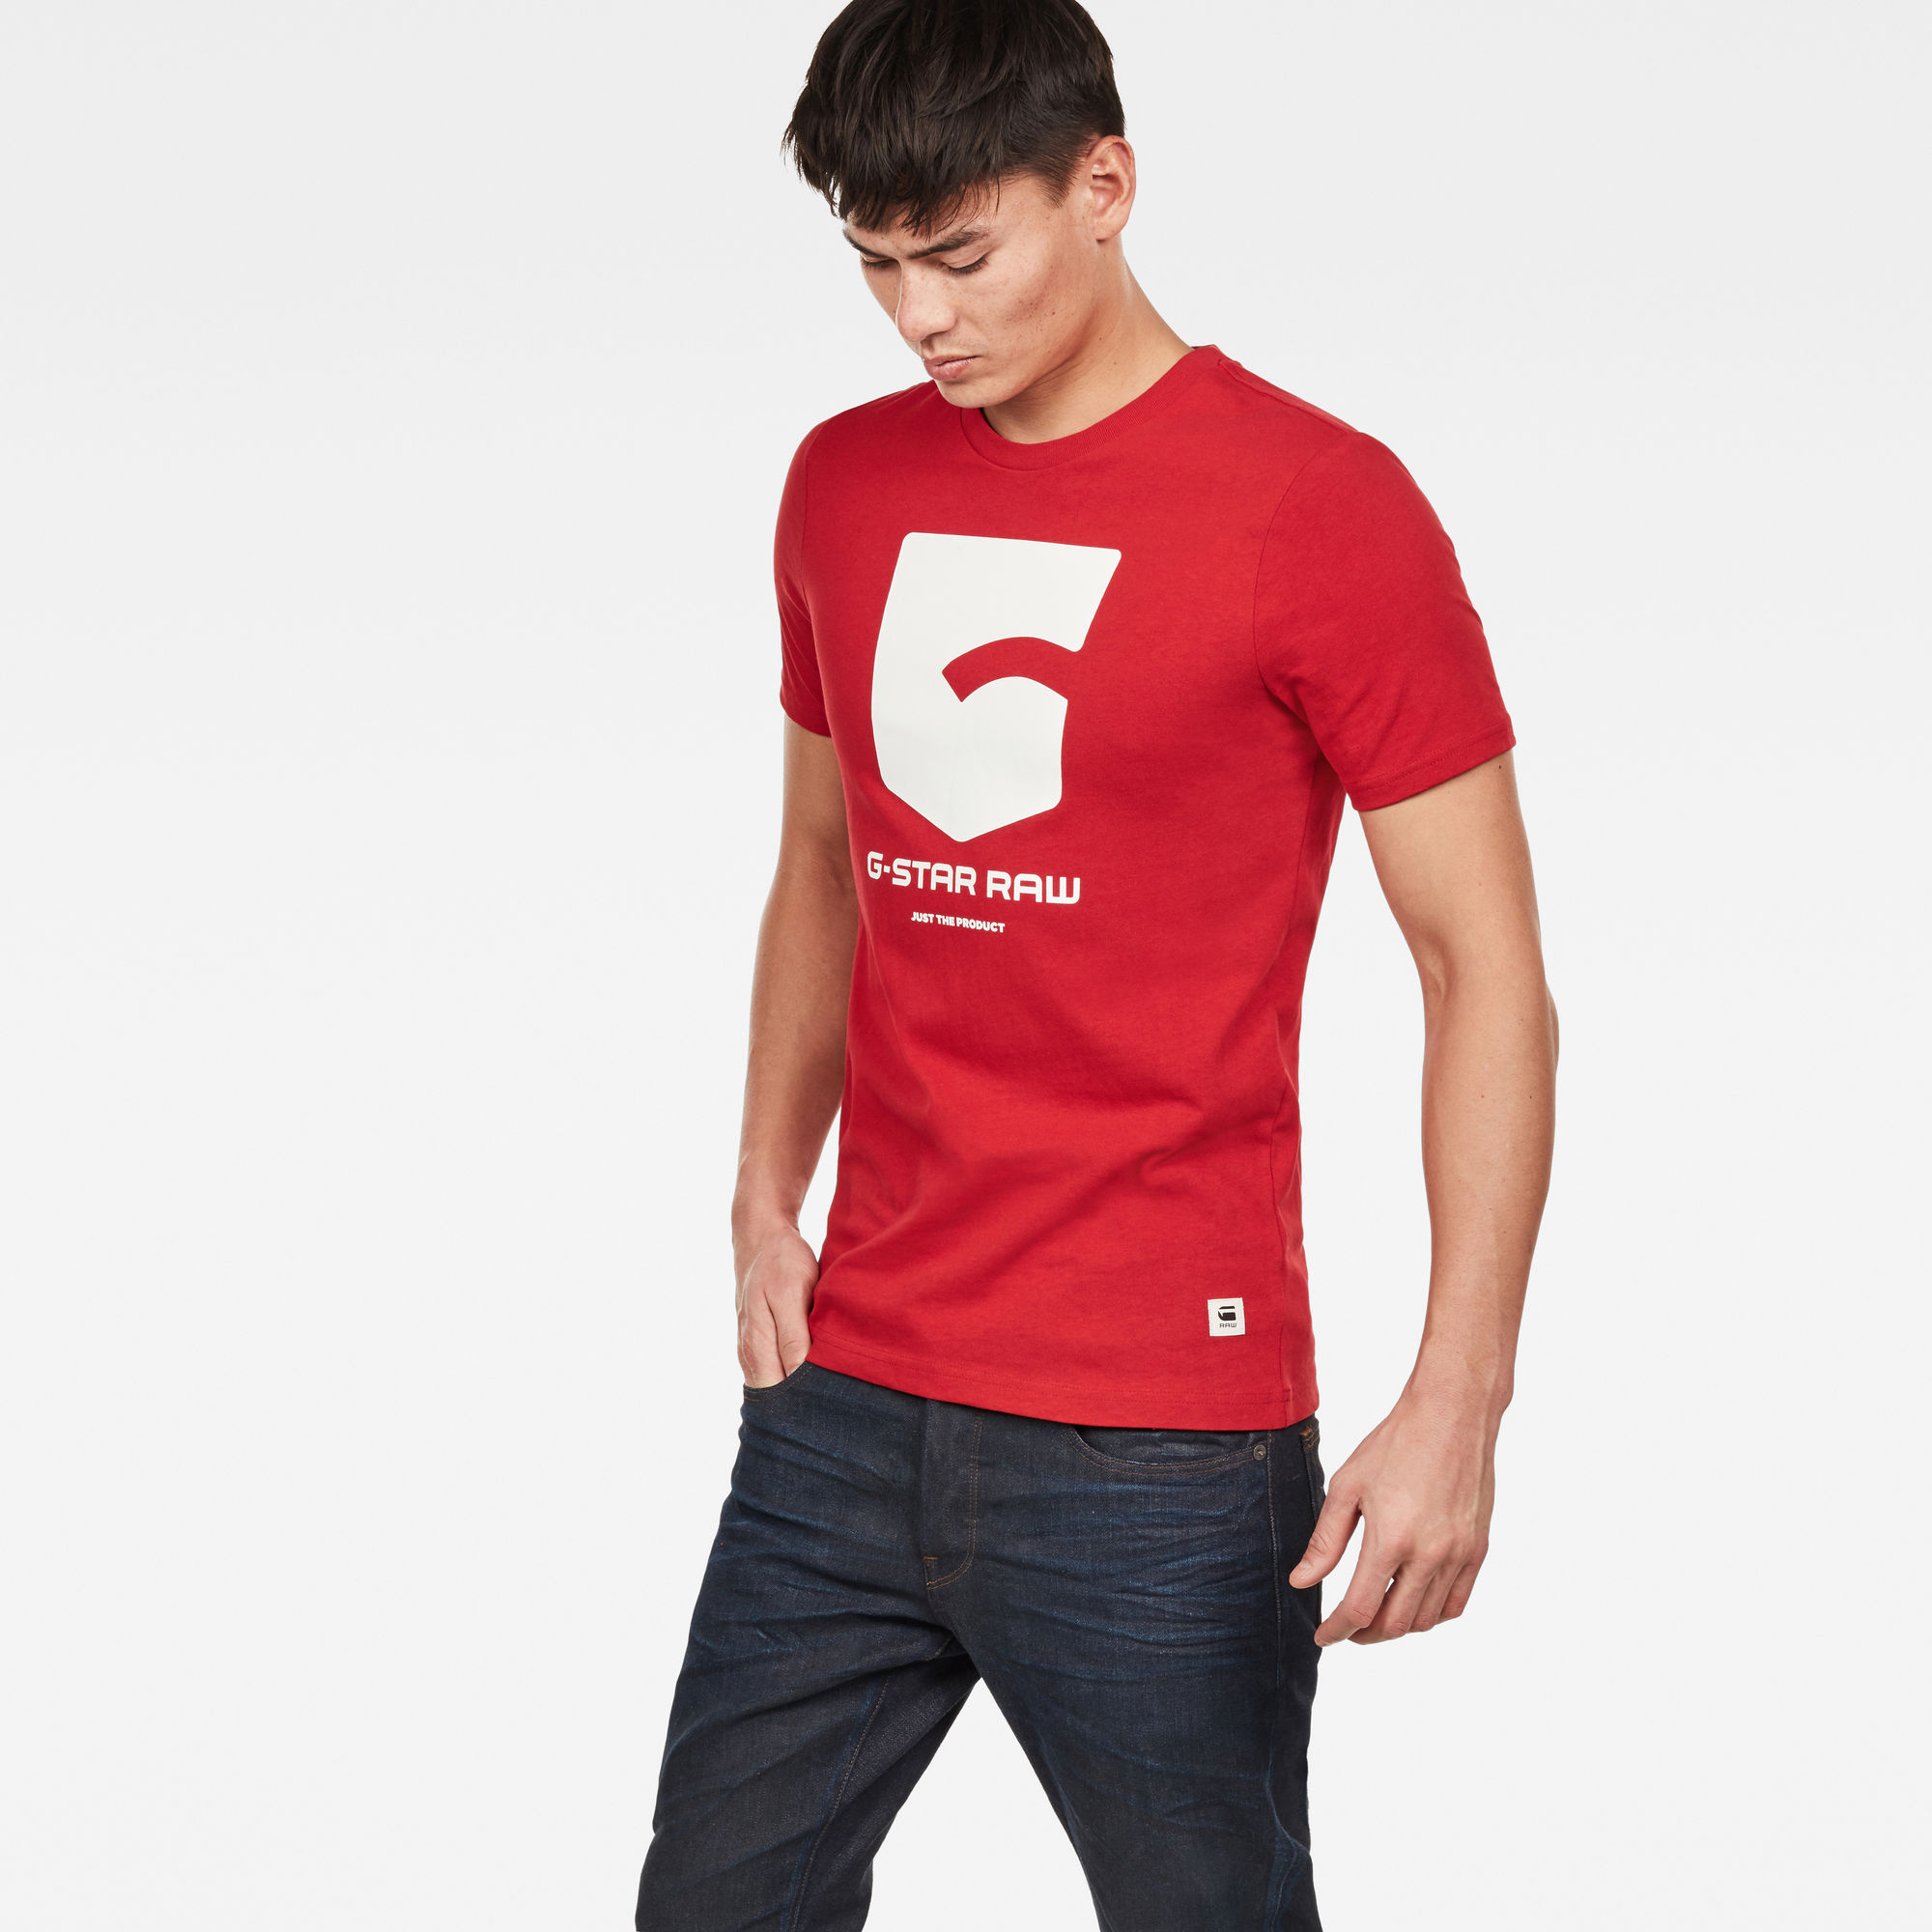 Graphic 47 T-Shirt | Red | G-Star RAWÂ®